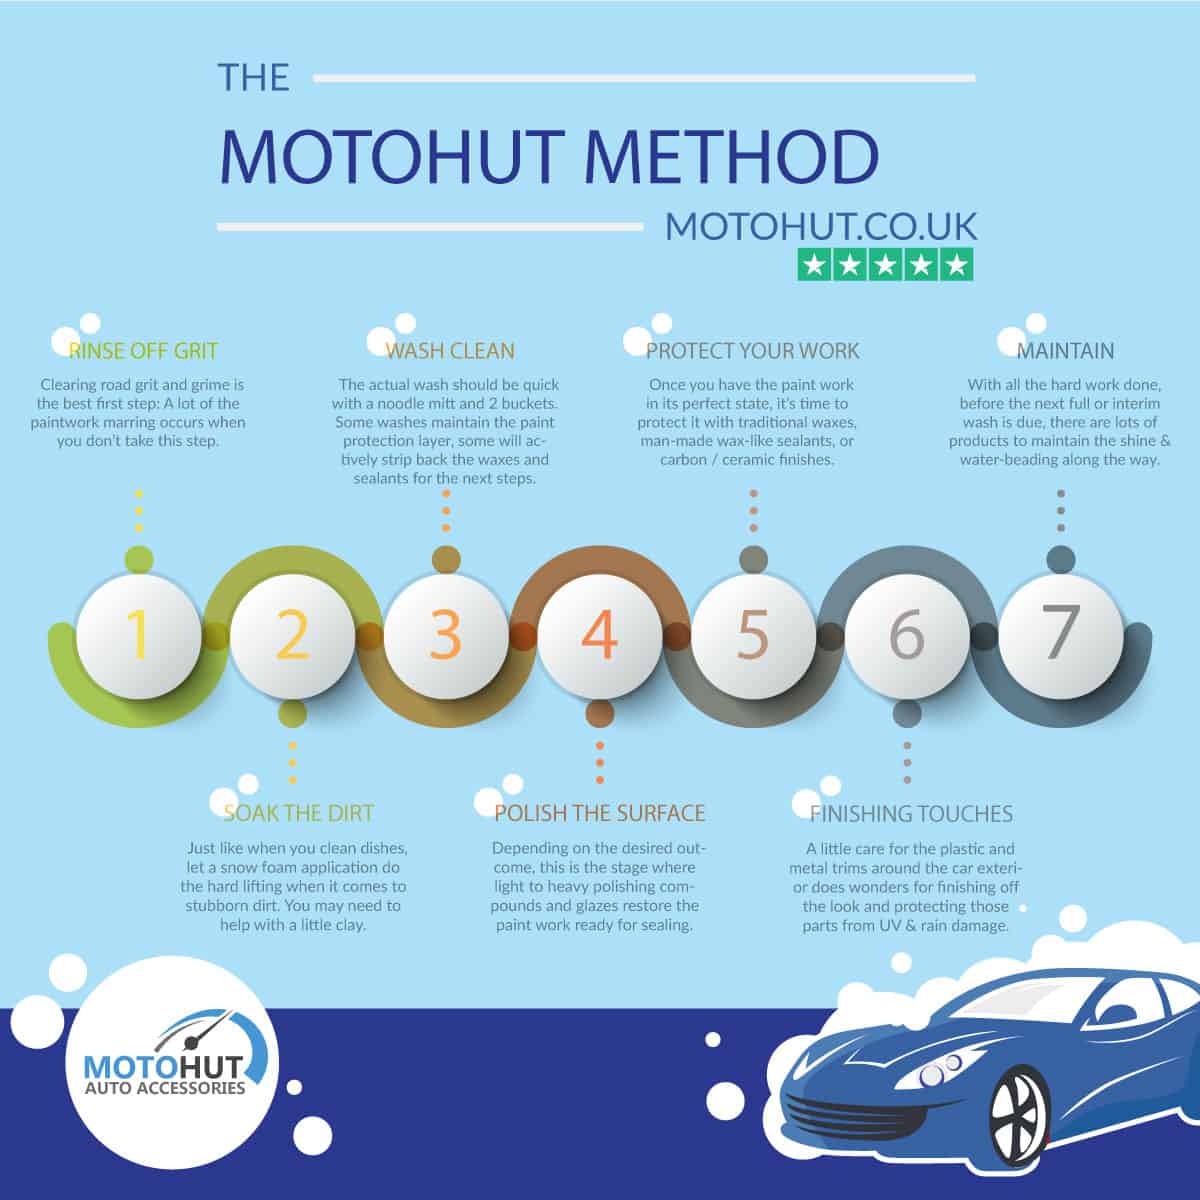 The Motohut Method